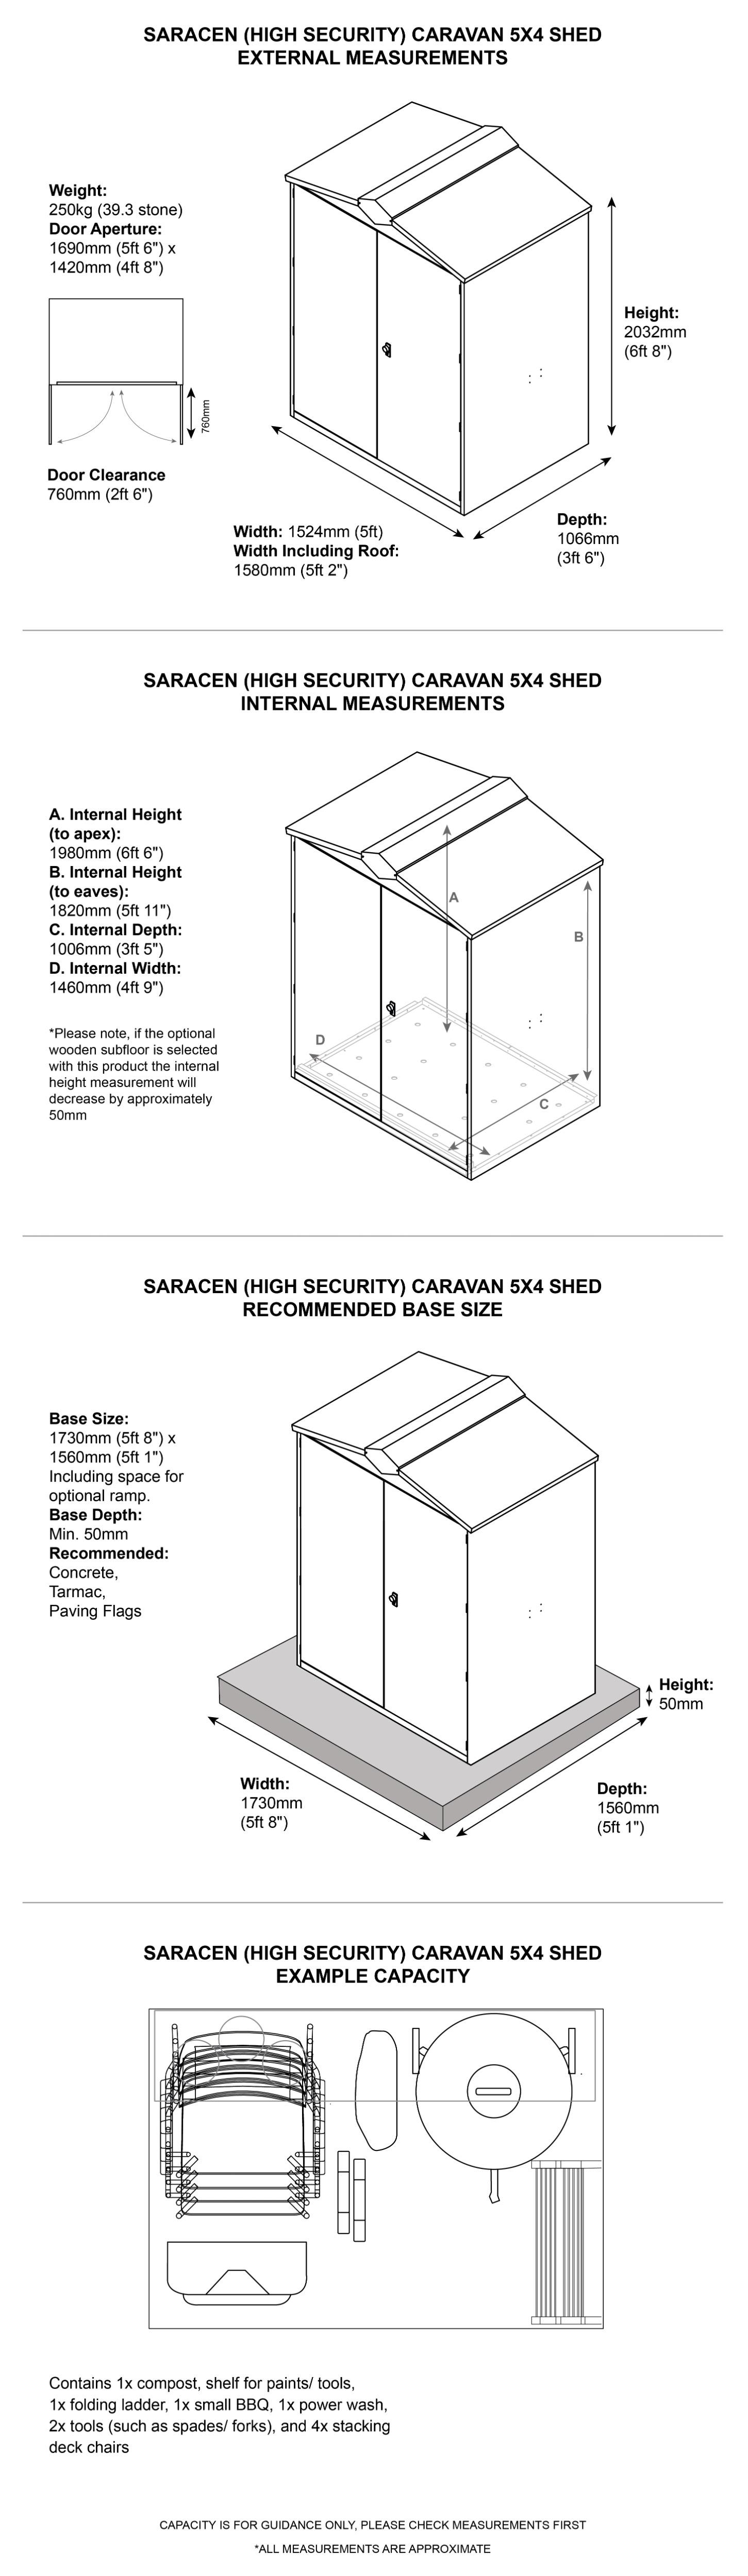 Saracen Caravan Storage Shed Dimensions